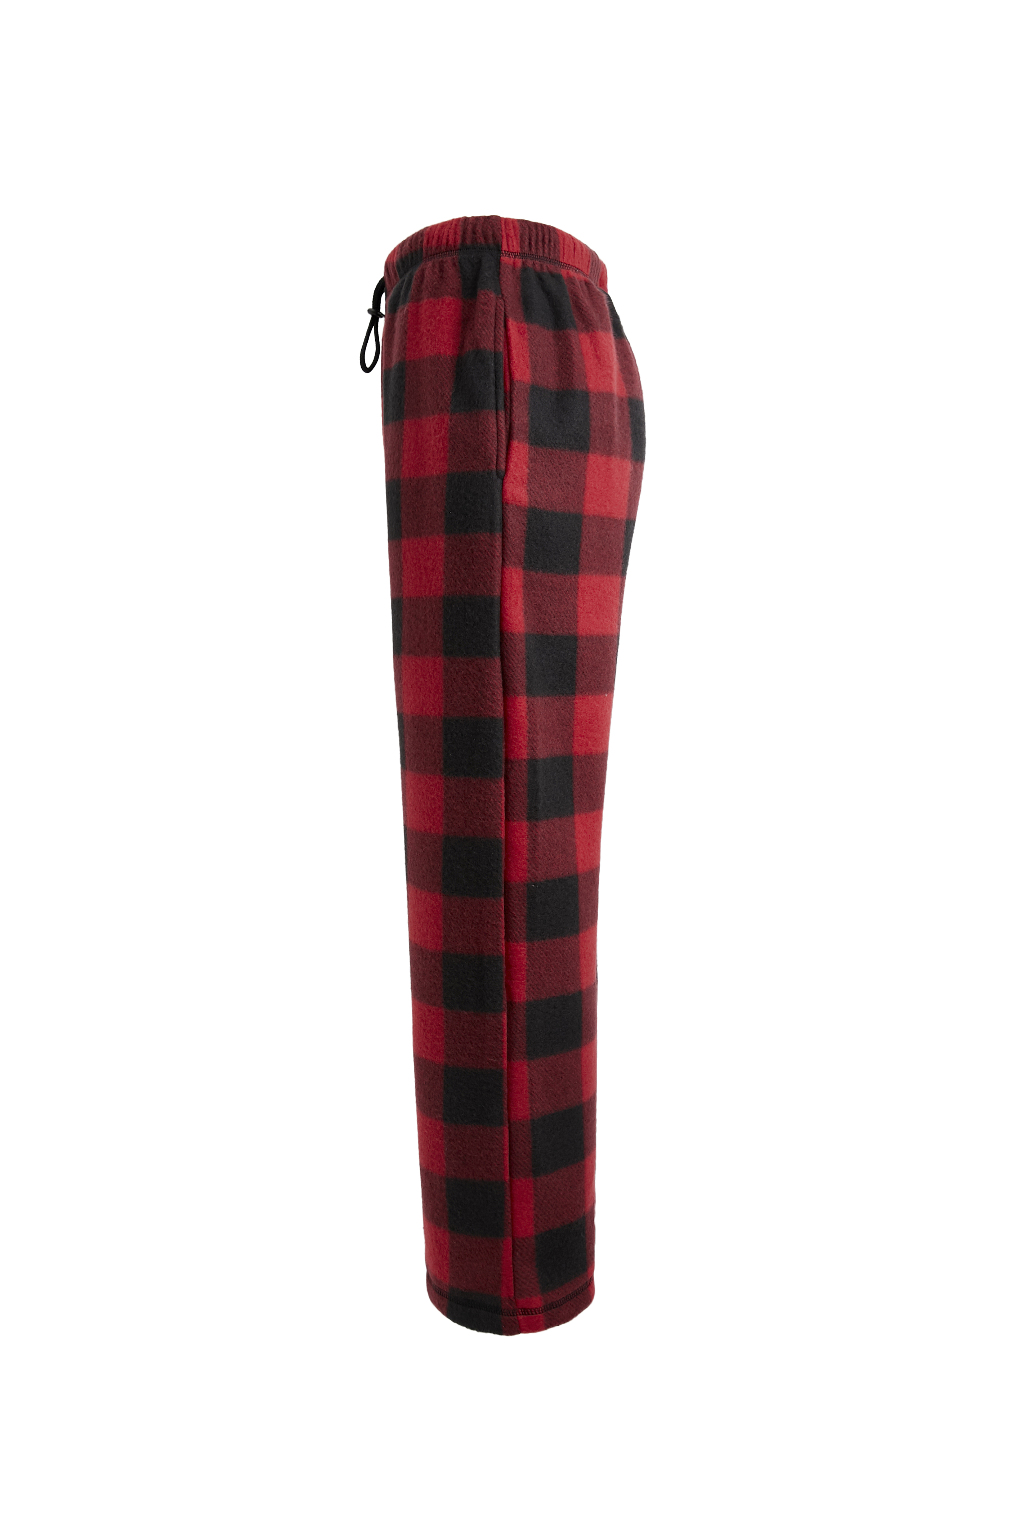  Red And Black Plaid Pajama Pants